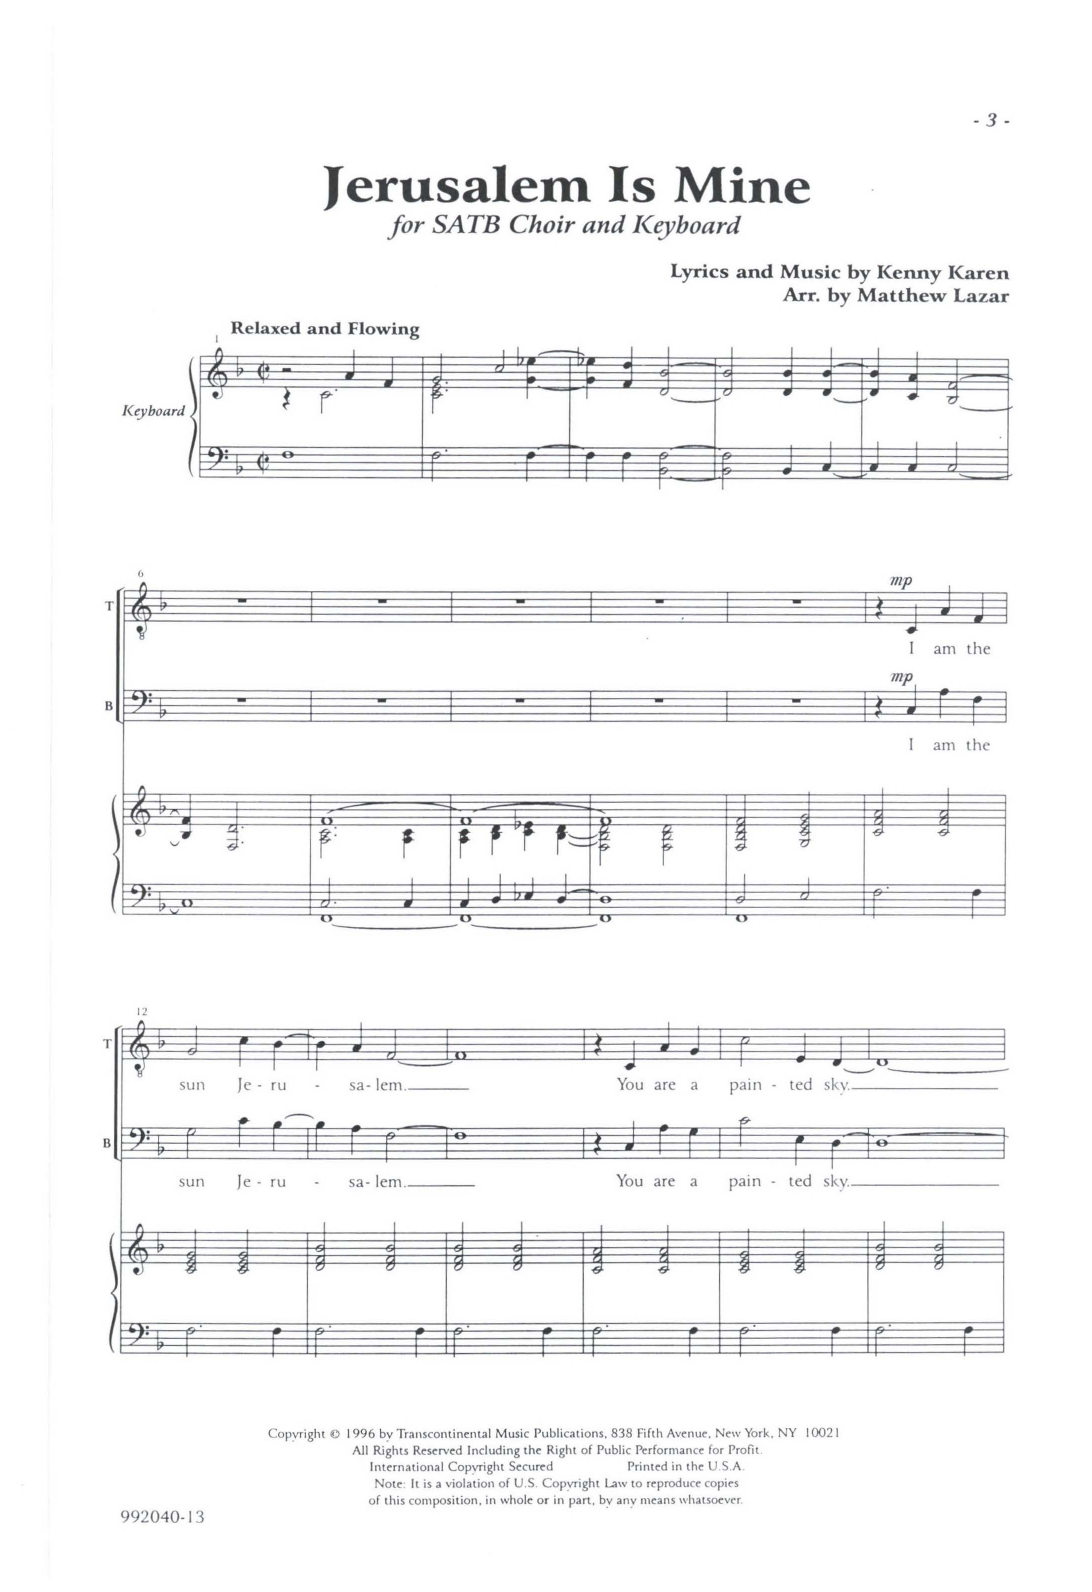 Kenny Karen Jerusalem Is Mine (arr. Matthew Lazar) Sheet Music Notes & Chords for SATB Choir - Download or Print PDF